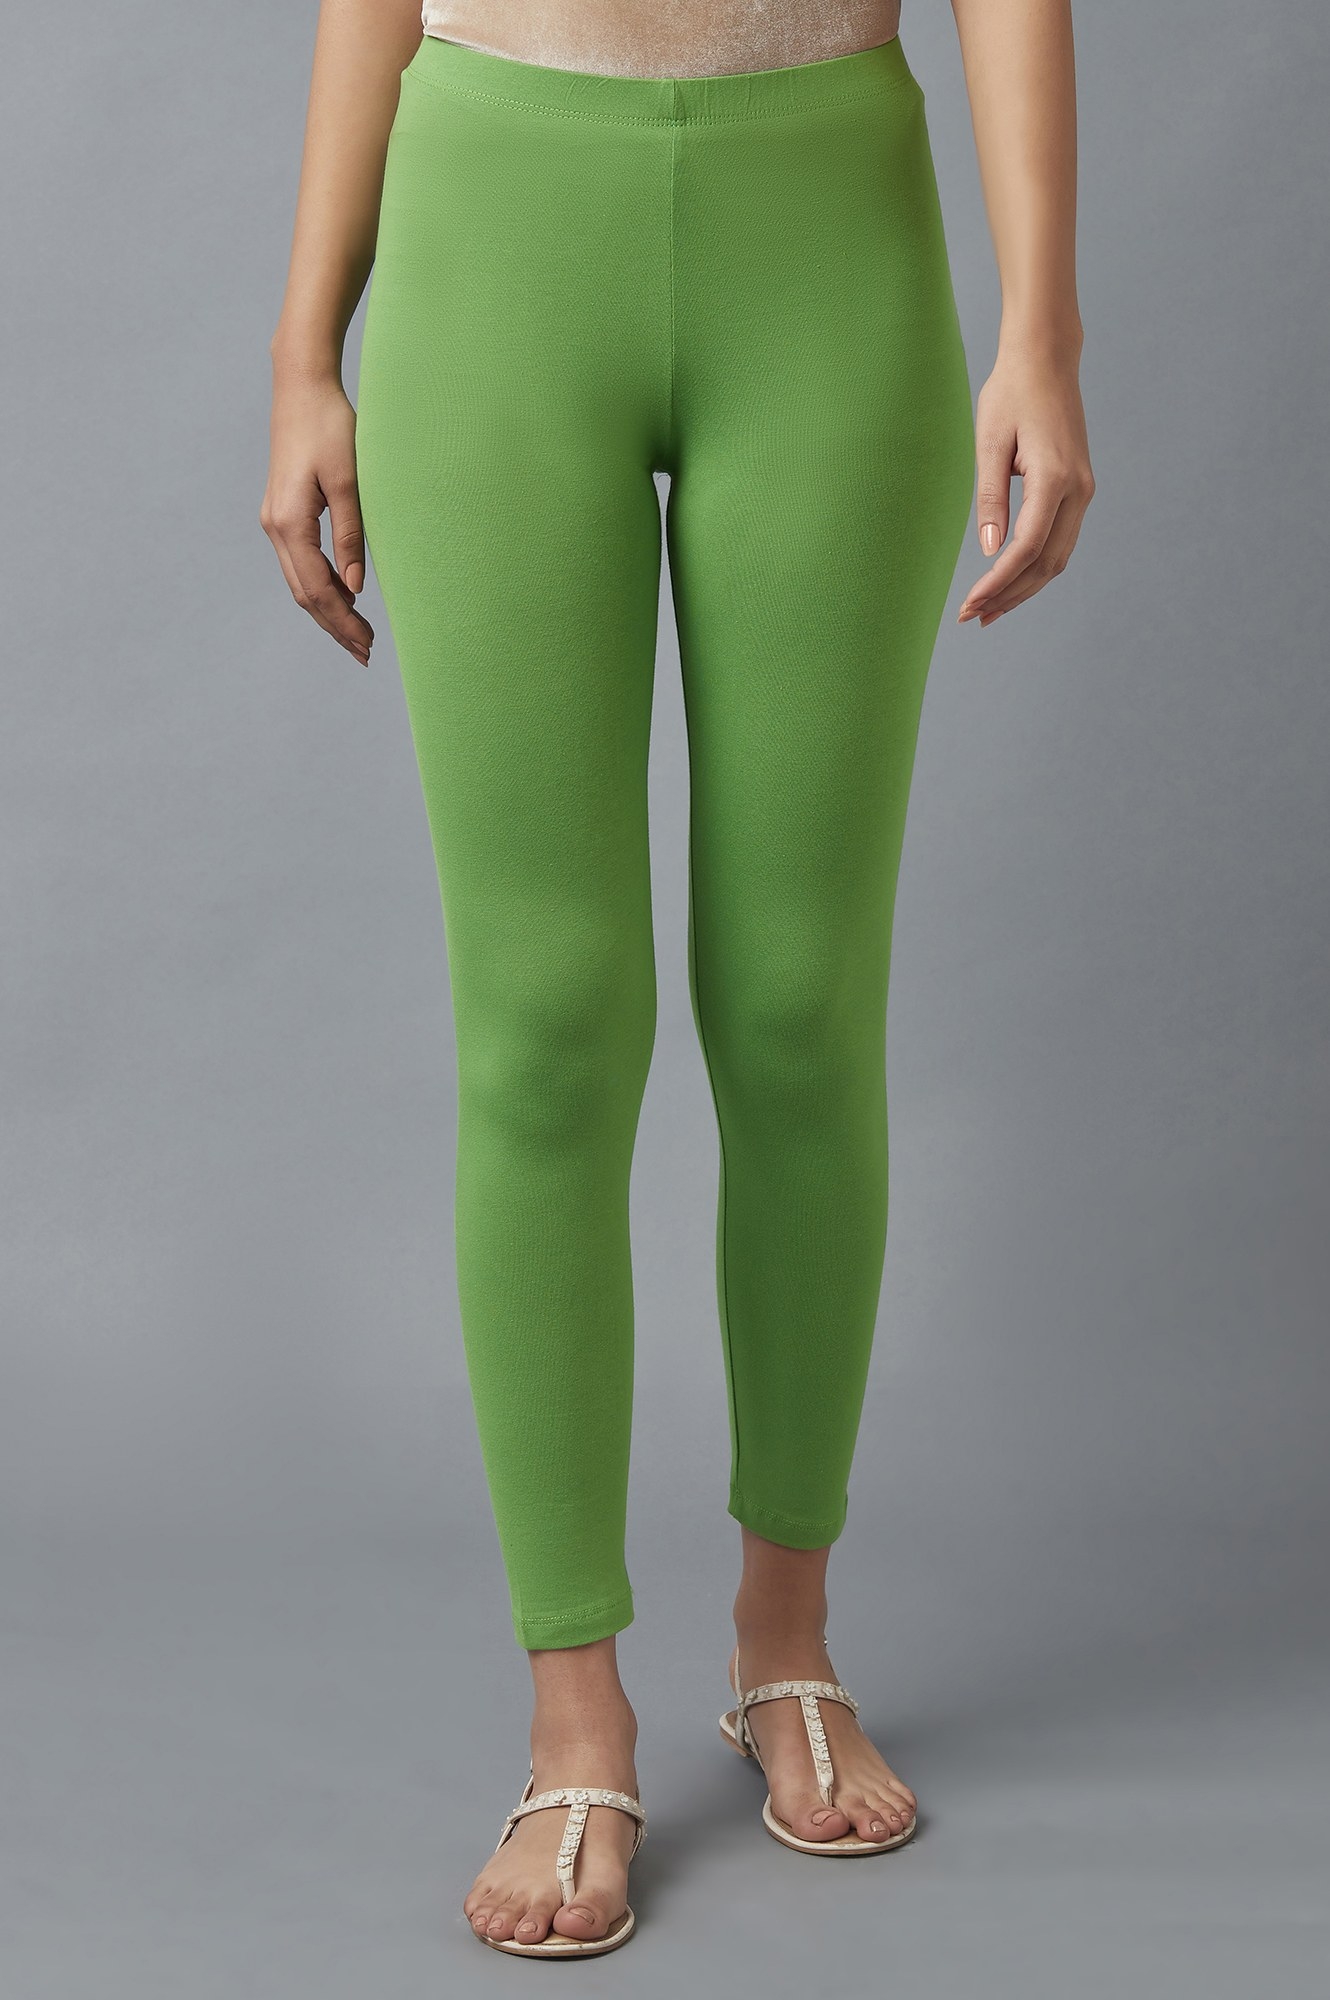 Buy Green Leggings for Women by LYRA Online | Ajio.com